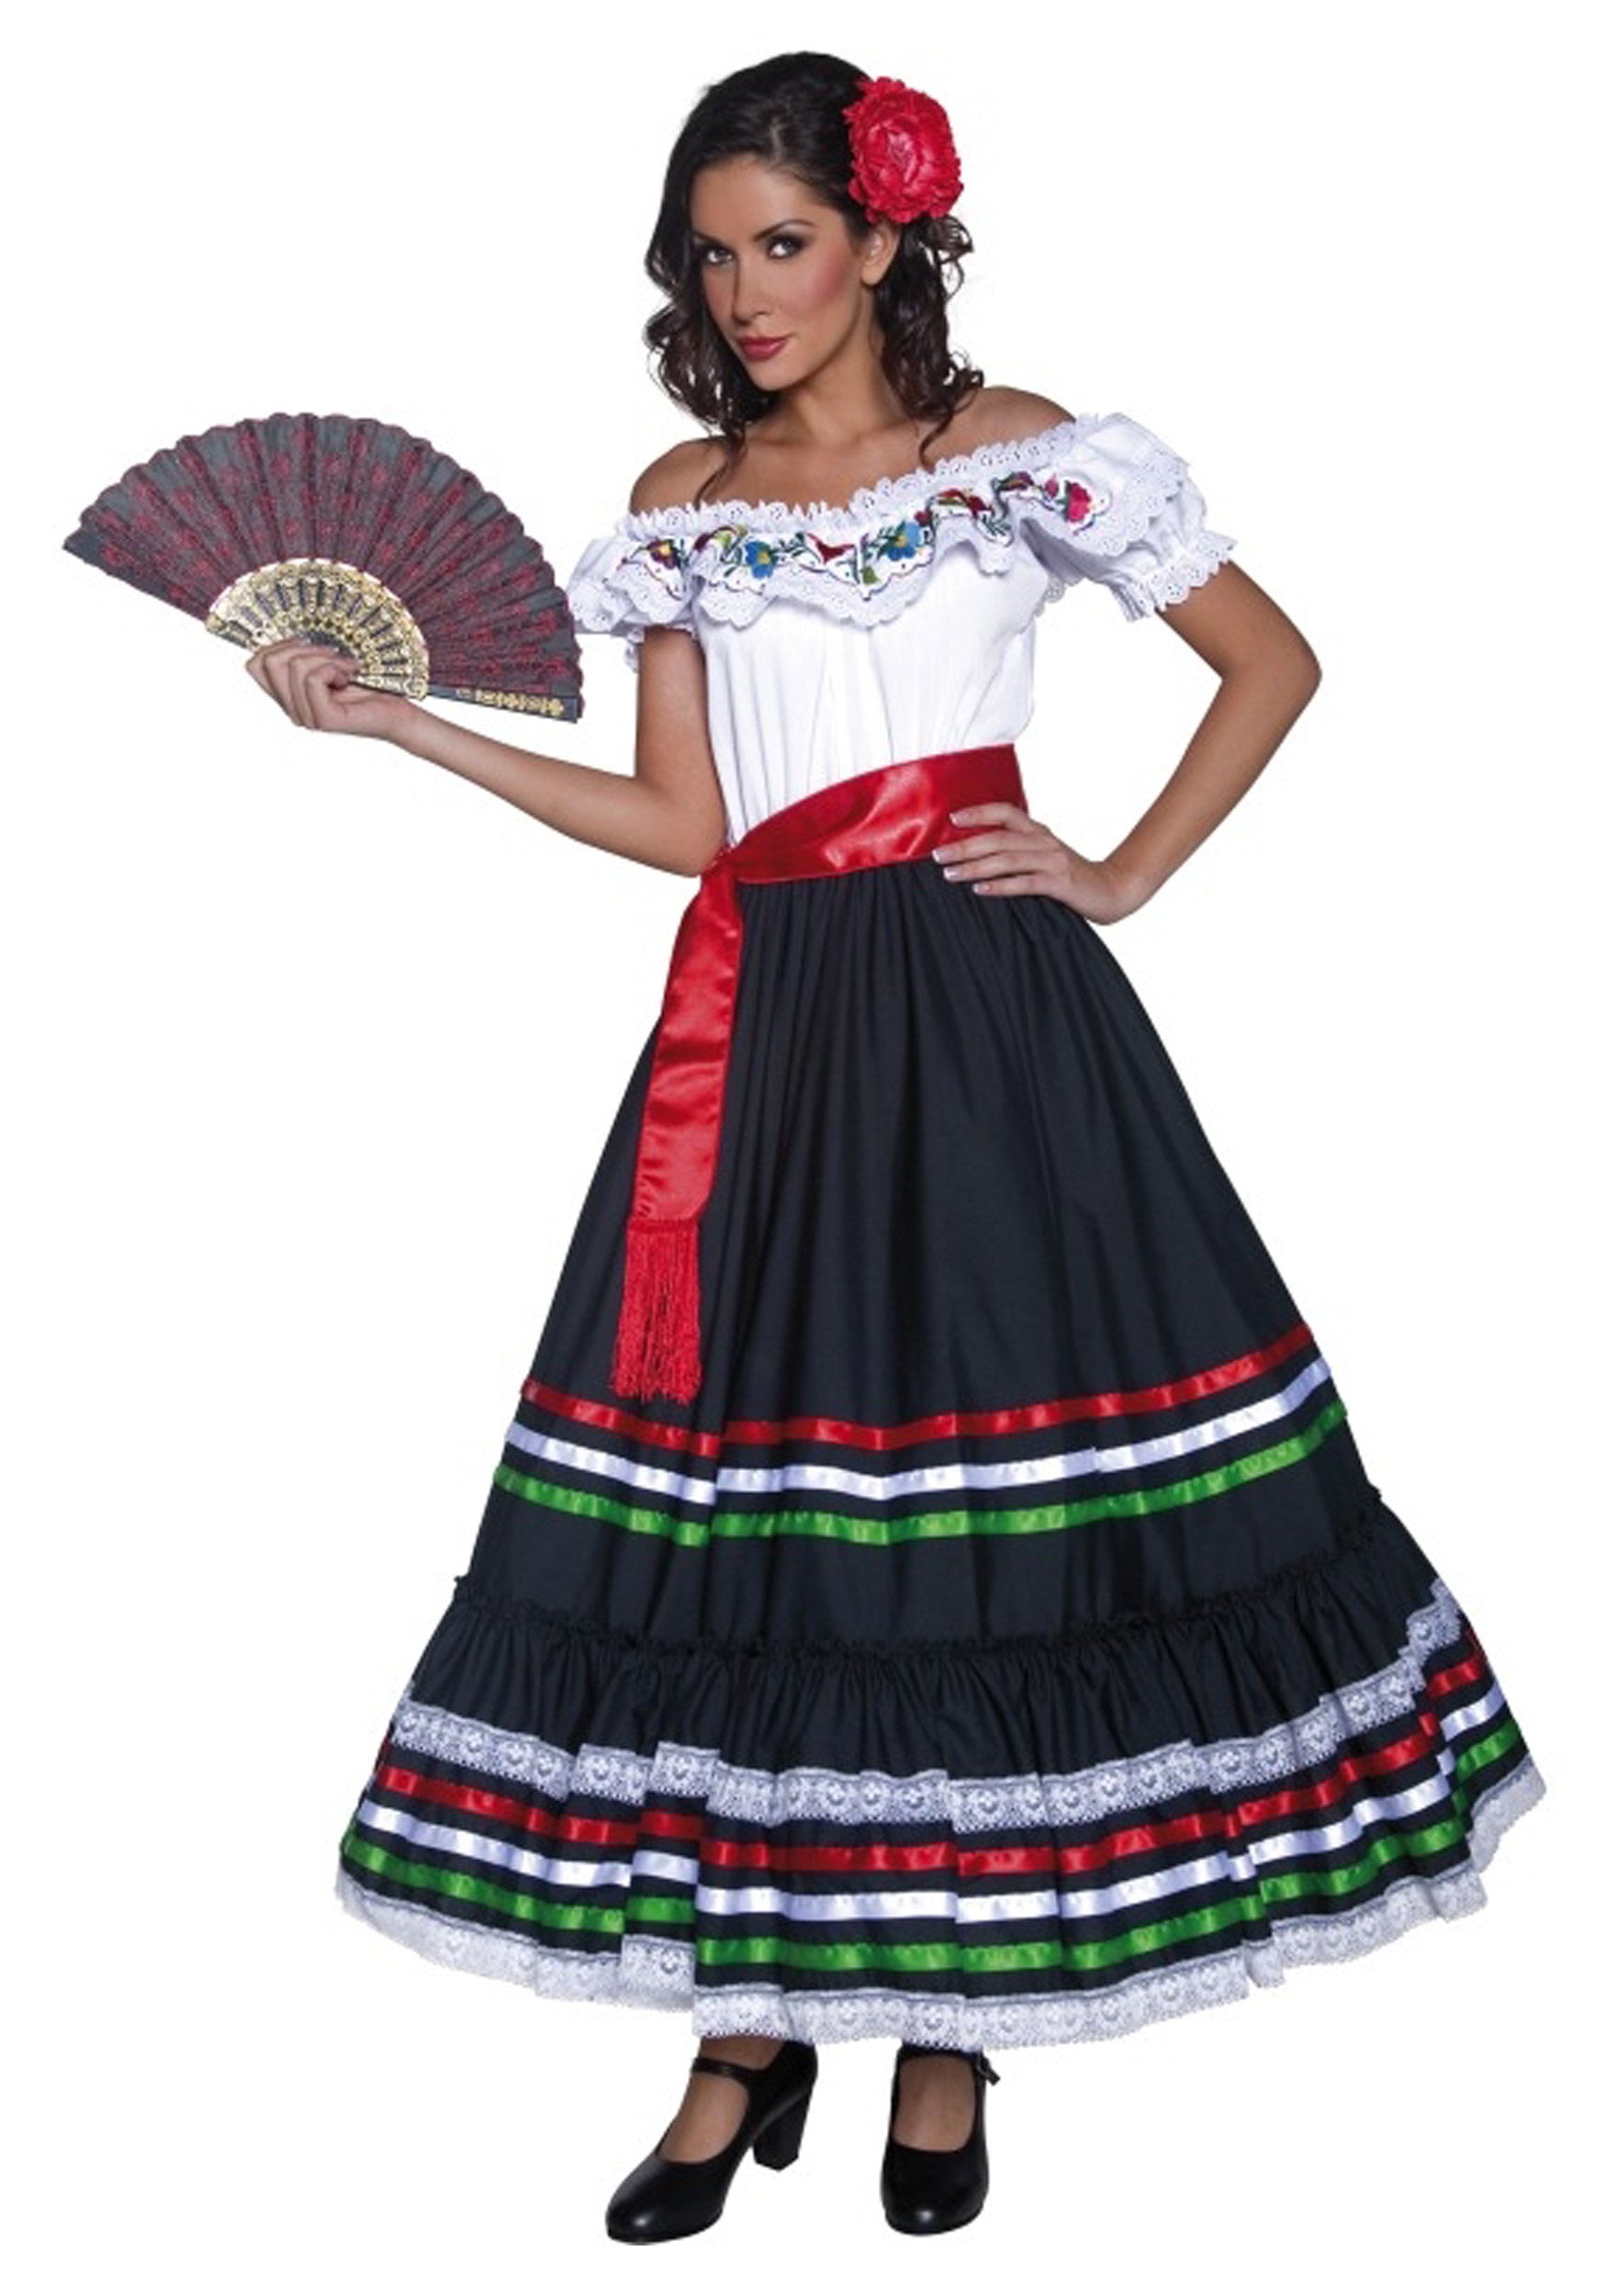 Authentic Western Senorita Costume ForAdults